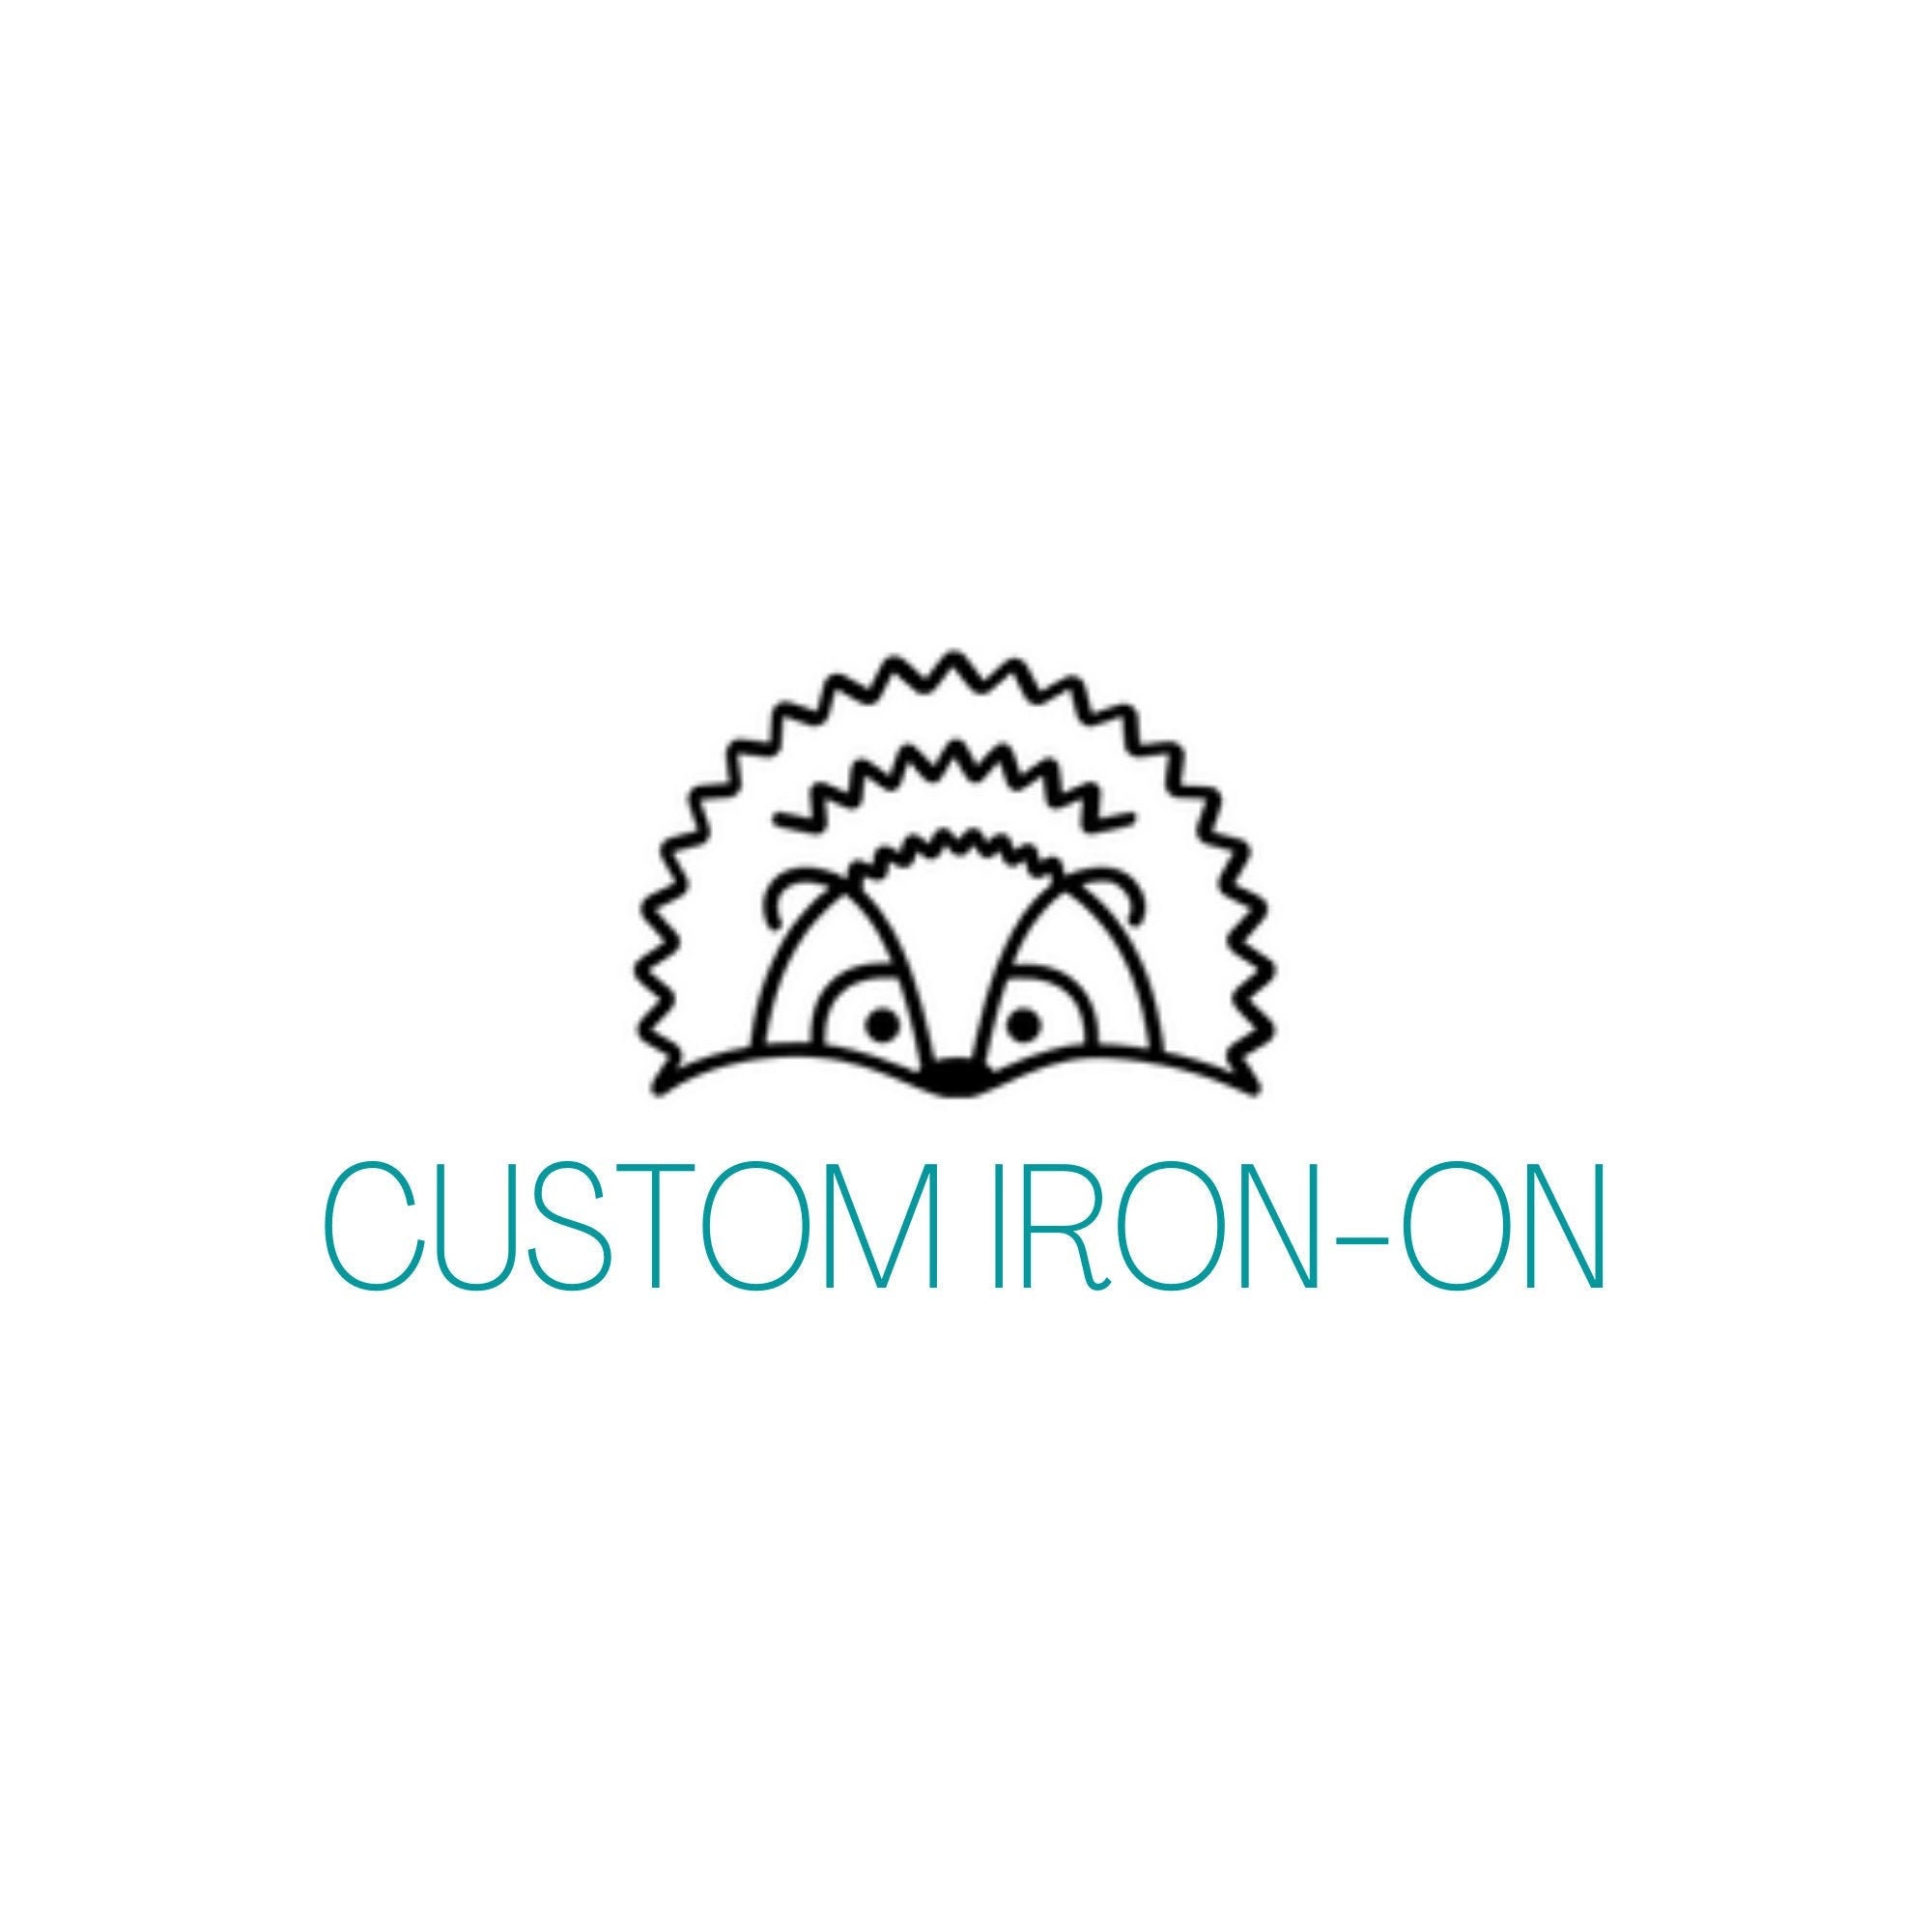 Custom Iron-on, Personalized HTV, DIY Iron-on, Heat Transfer Vinyl,  Colorful, Rainbow, Glitter 